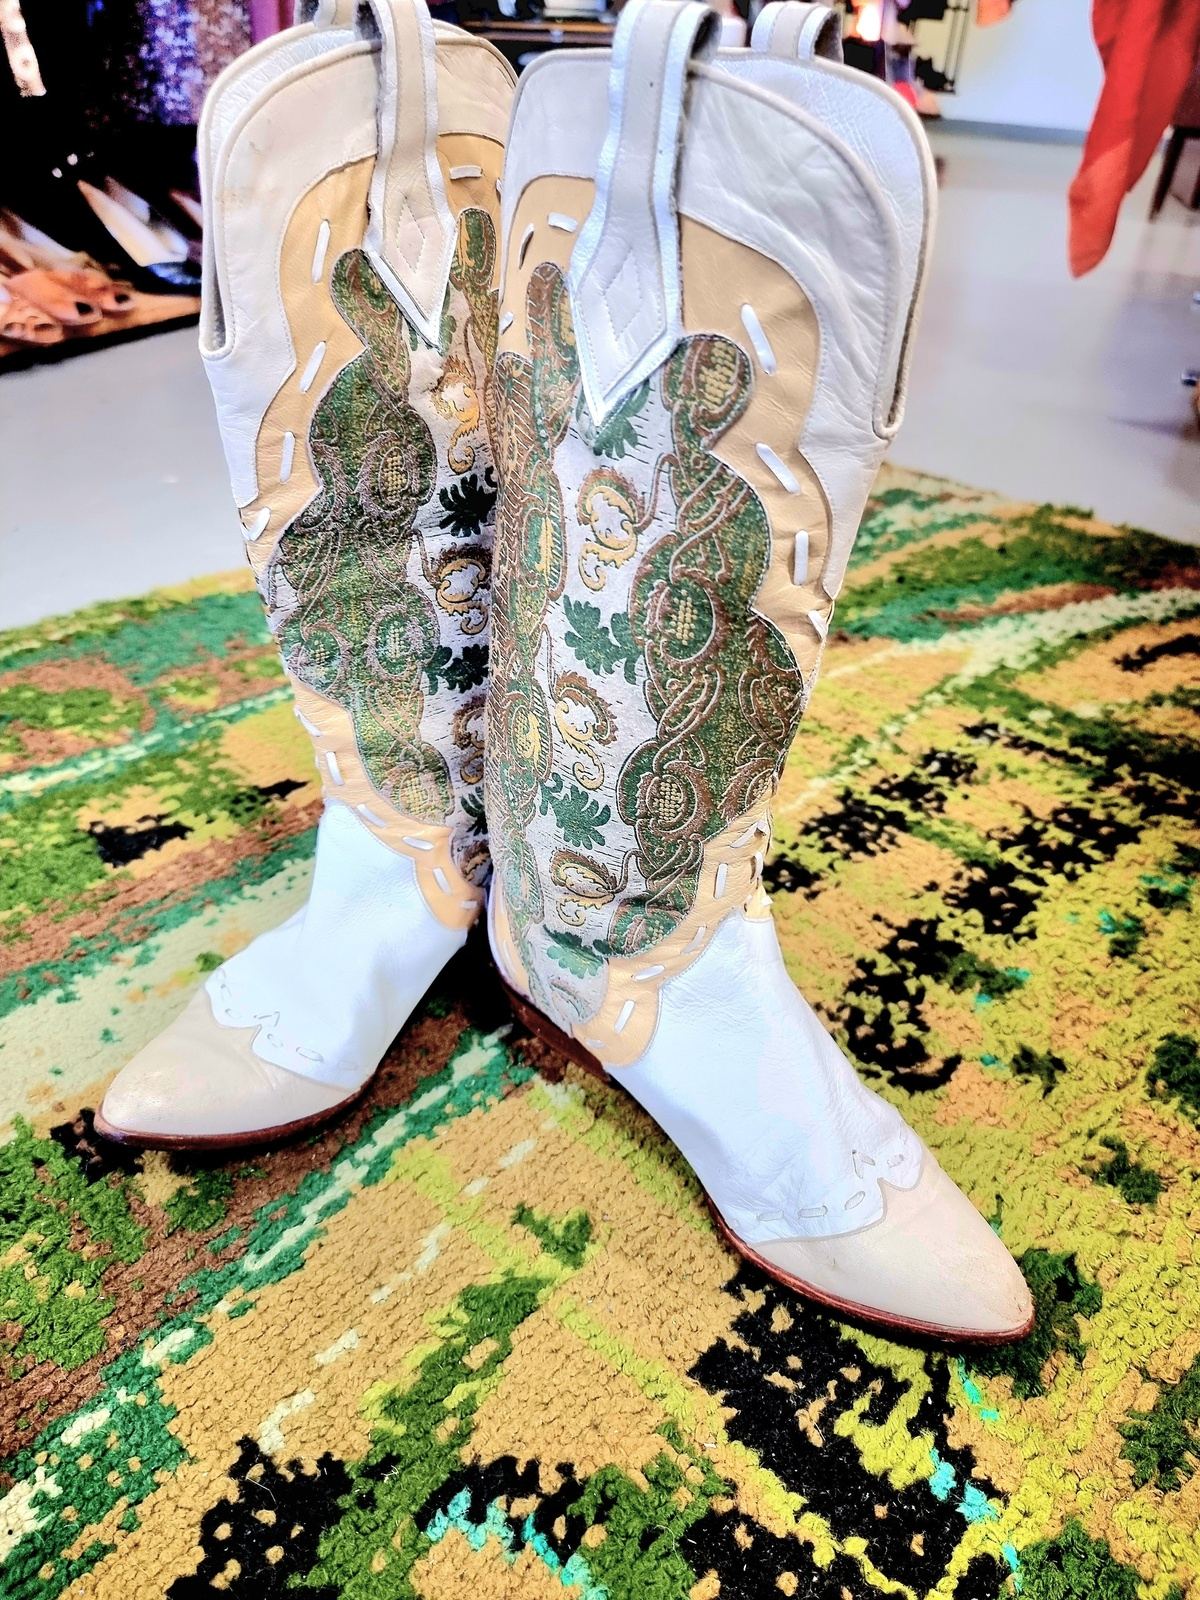 Vintage Alvoro Carpena Cowboy Boots